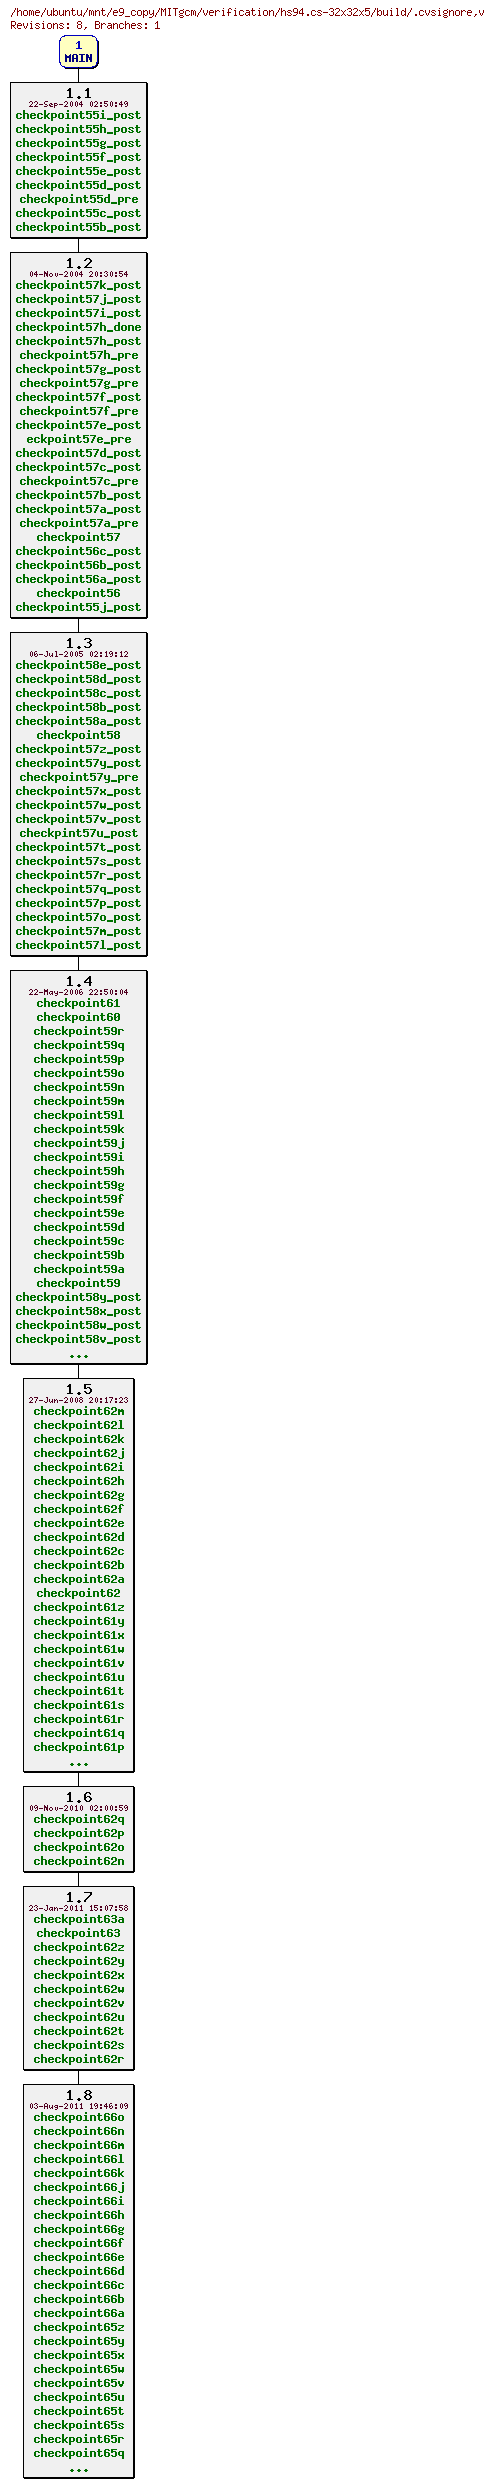 Revisions of MITgcm/verification/hs94.cs-32x32x5/build/.cvsignore